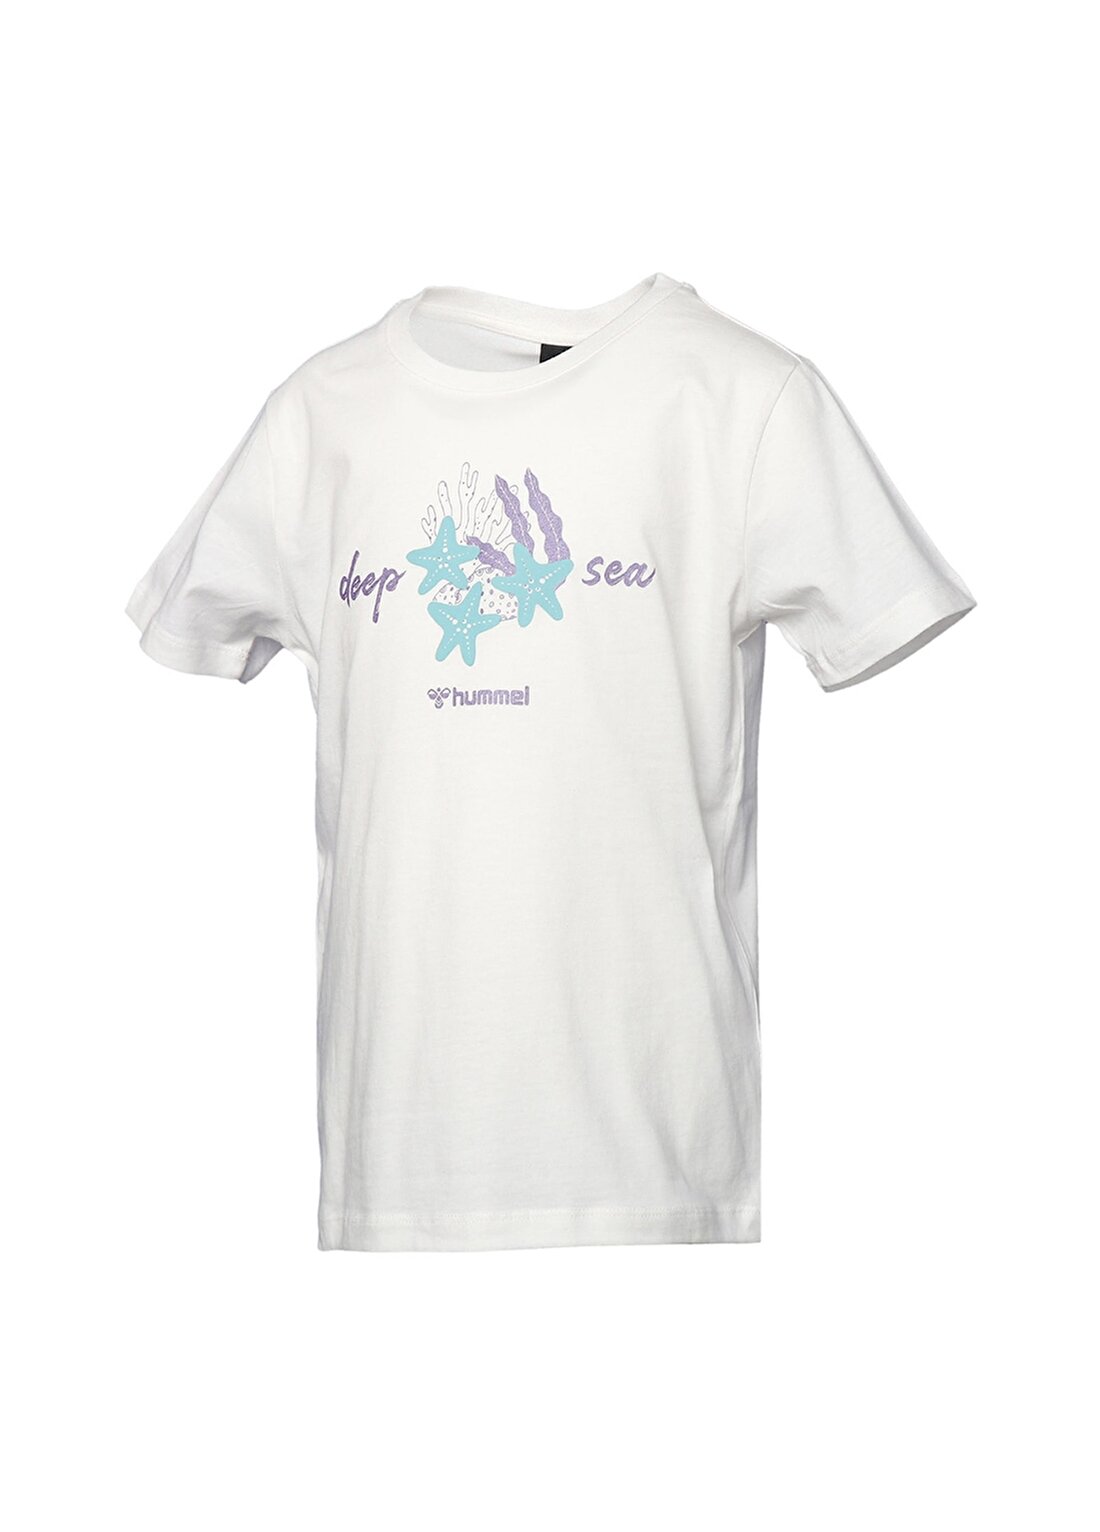 Hummel ASTERIODA T-SHIRT S/S Beyaz Kız Çocuk T-Shirt 911470-9003